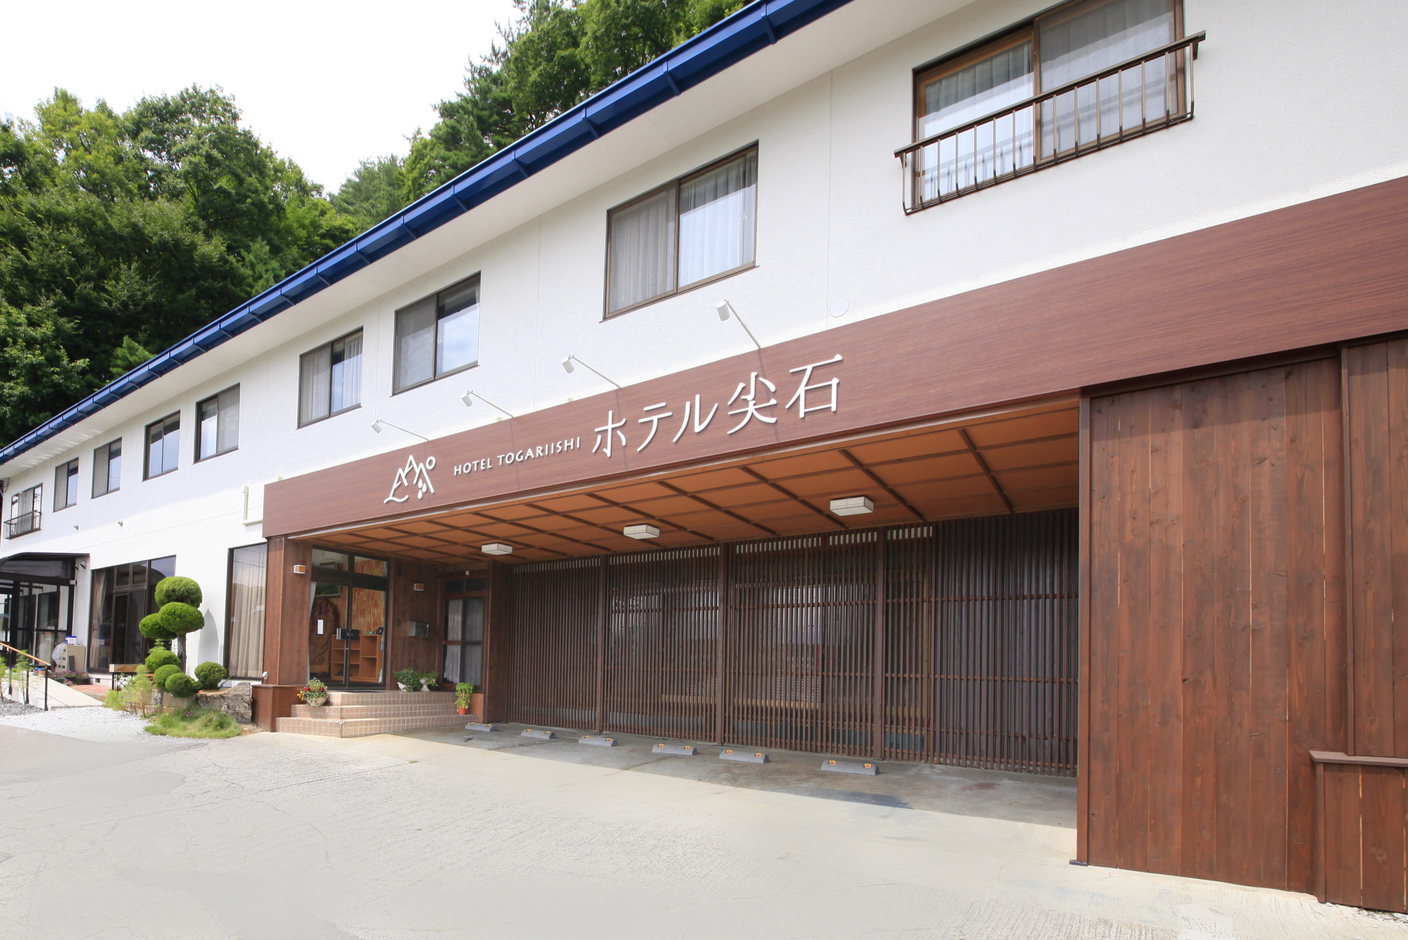 Hotel Togariishi